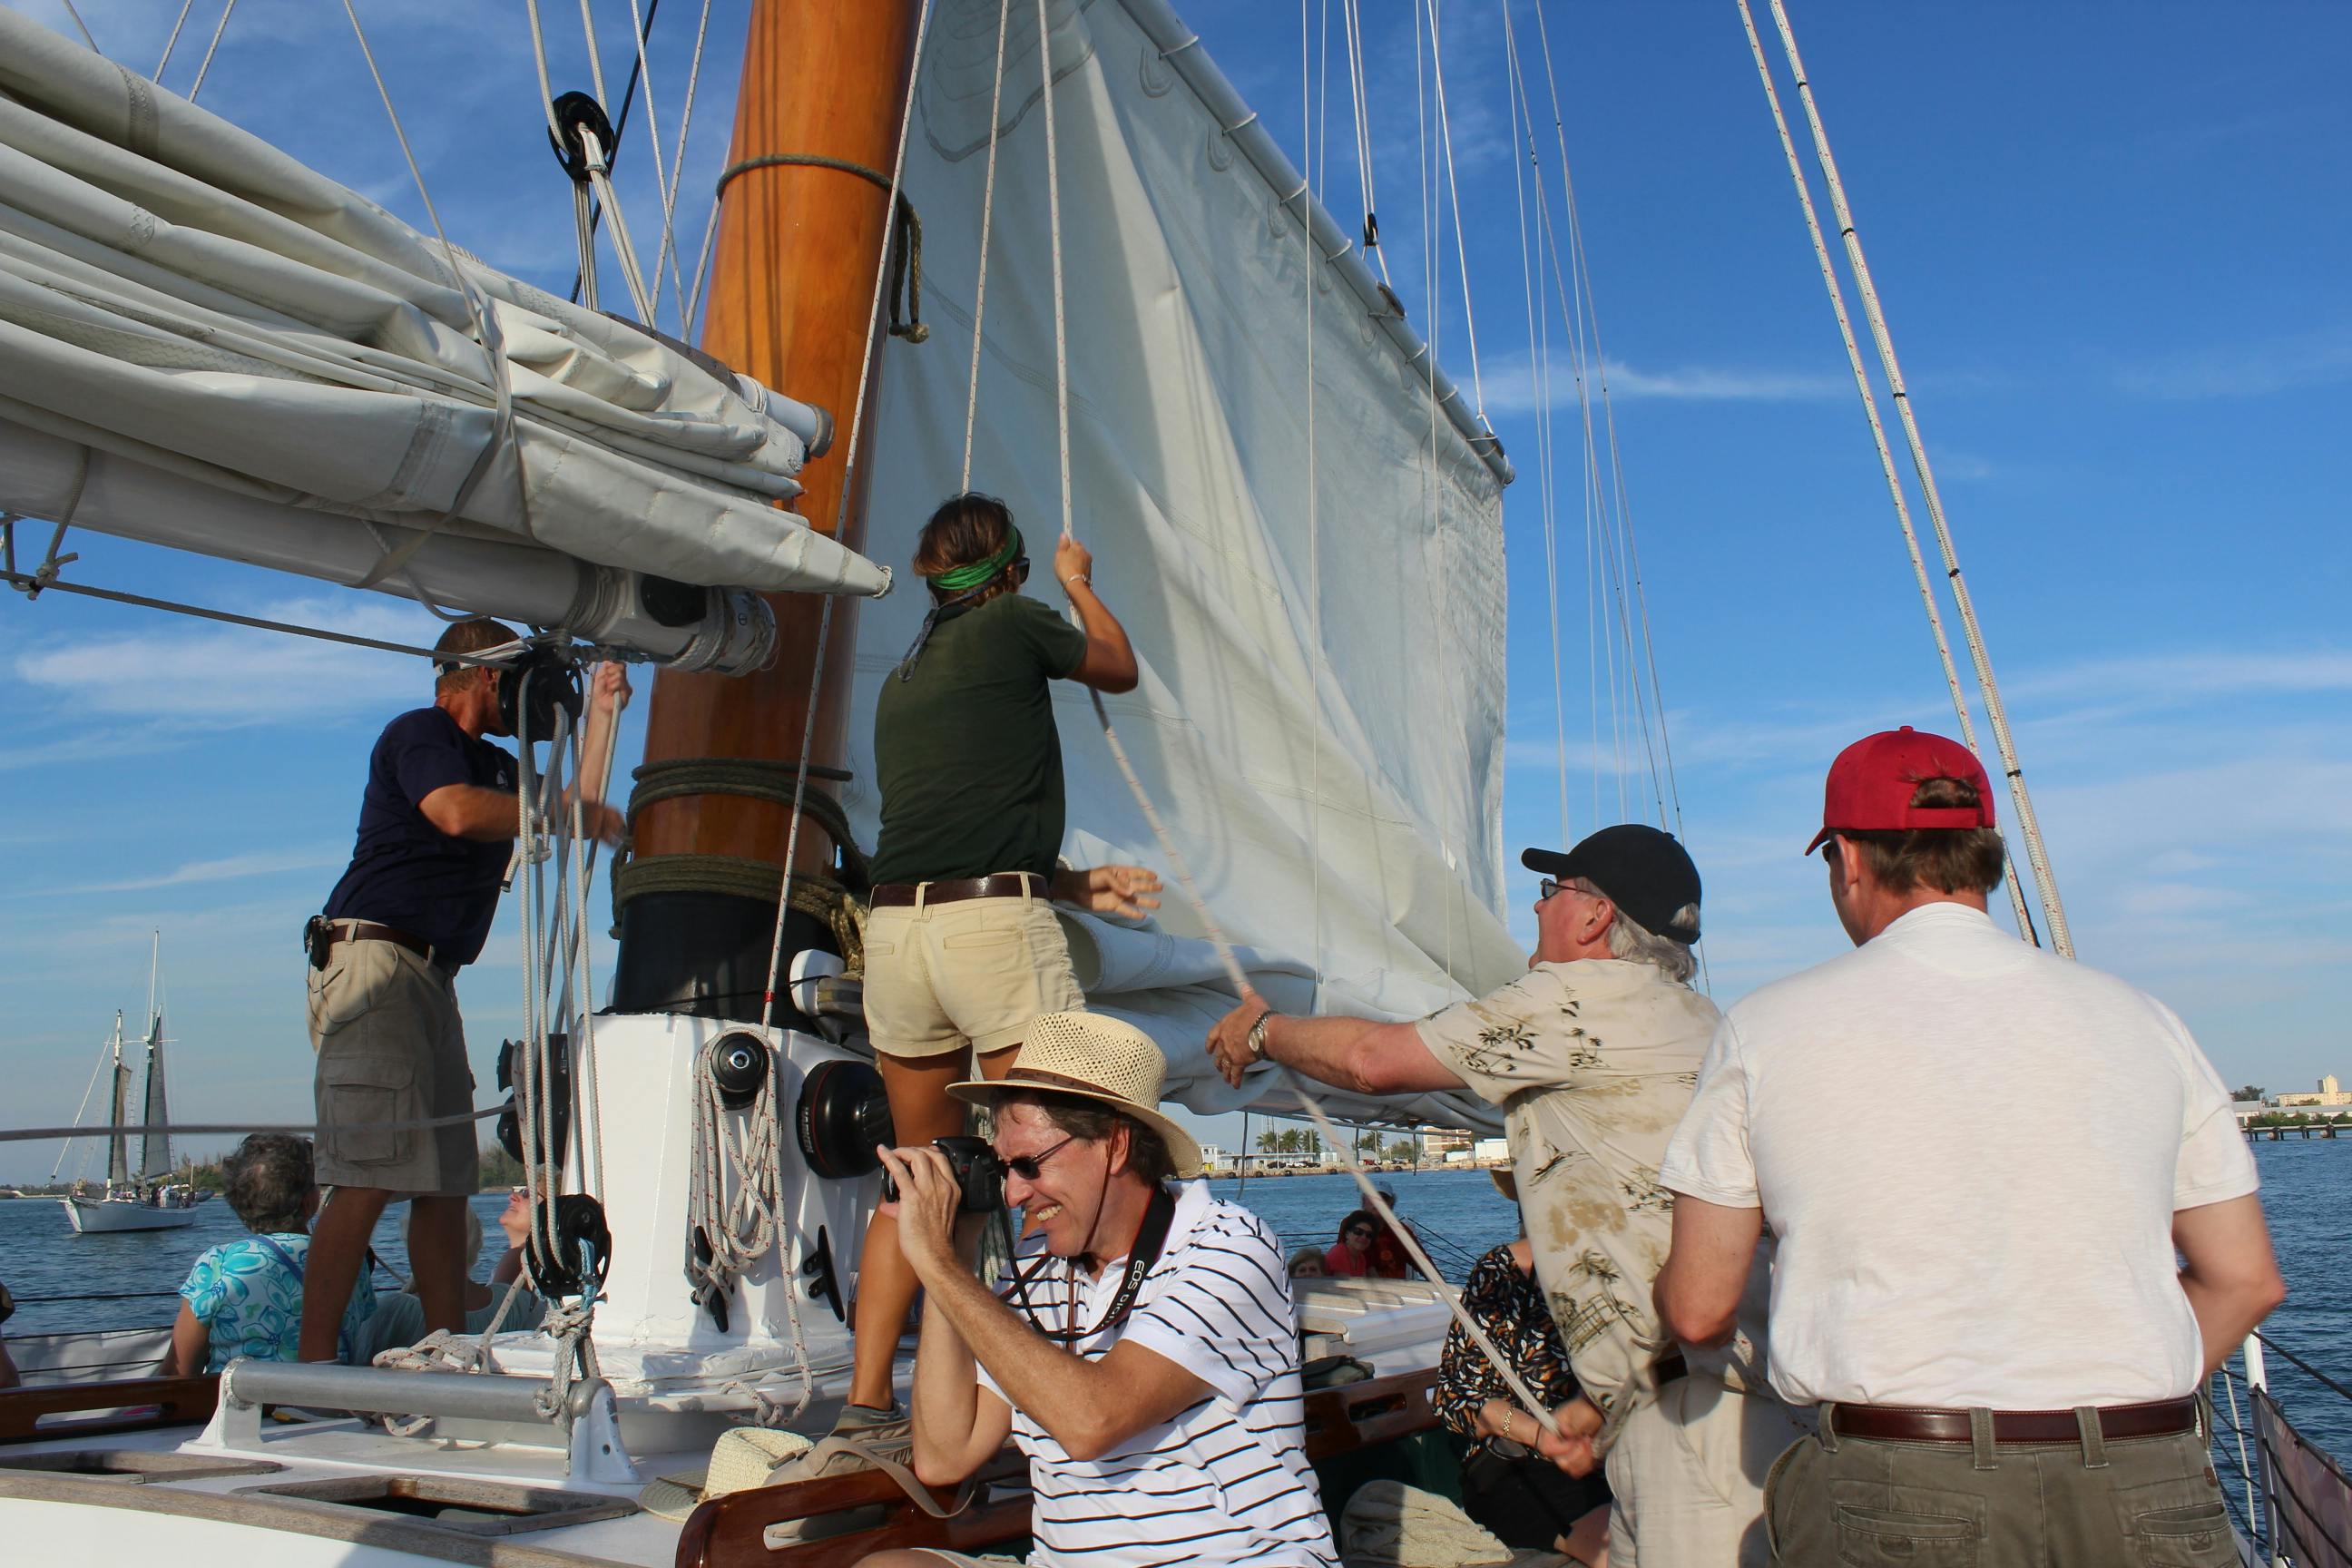 Classic Day Sail on Schooner America 2.0 Musement